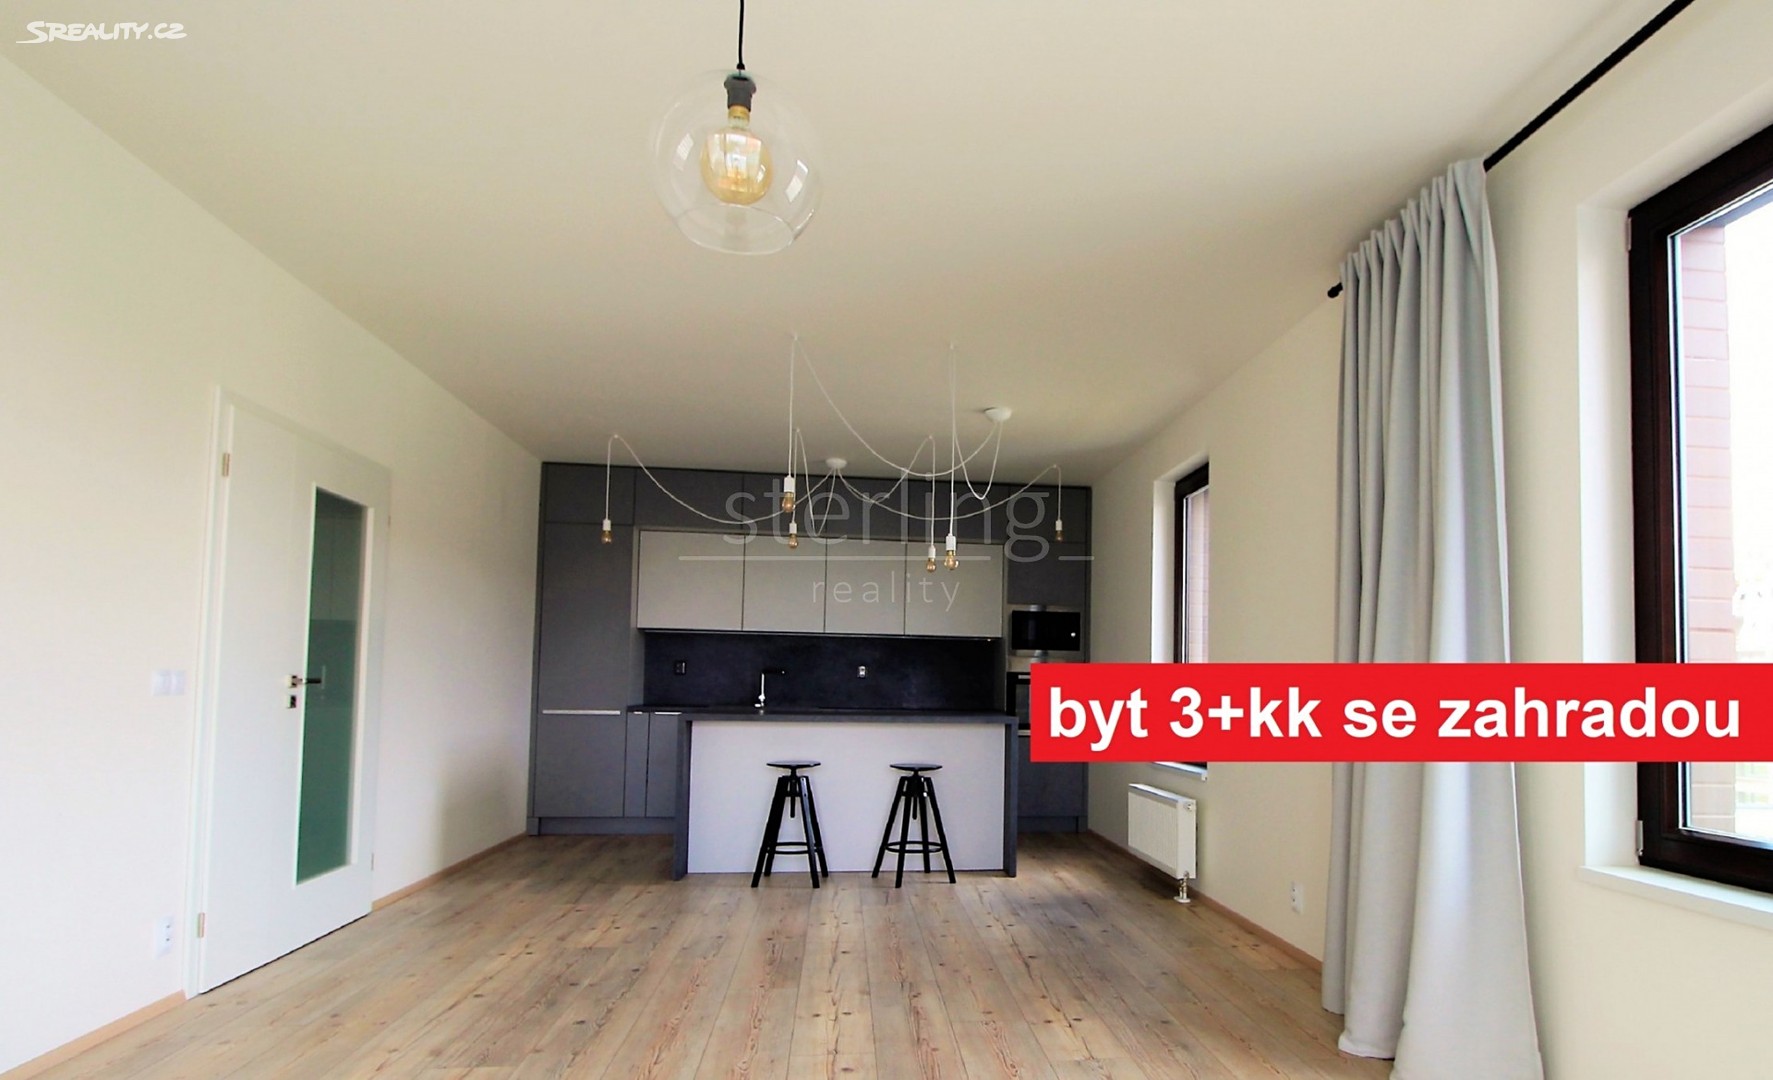 Prodej bytu 3+kk 68 m², Pardubice - Dražkovice, okres Pardubice